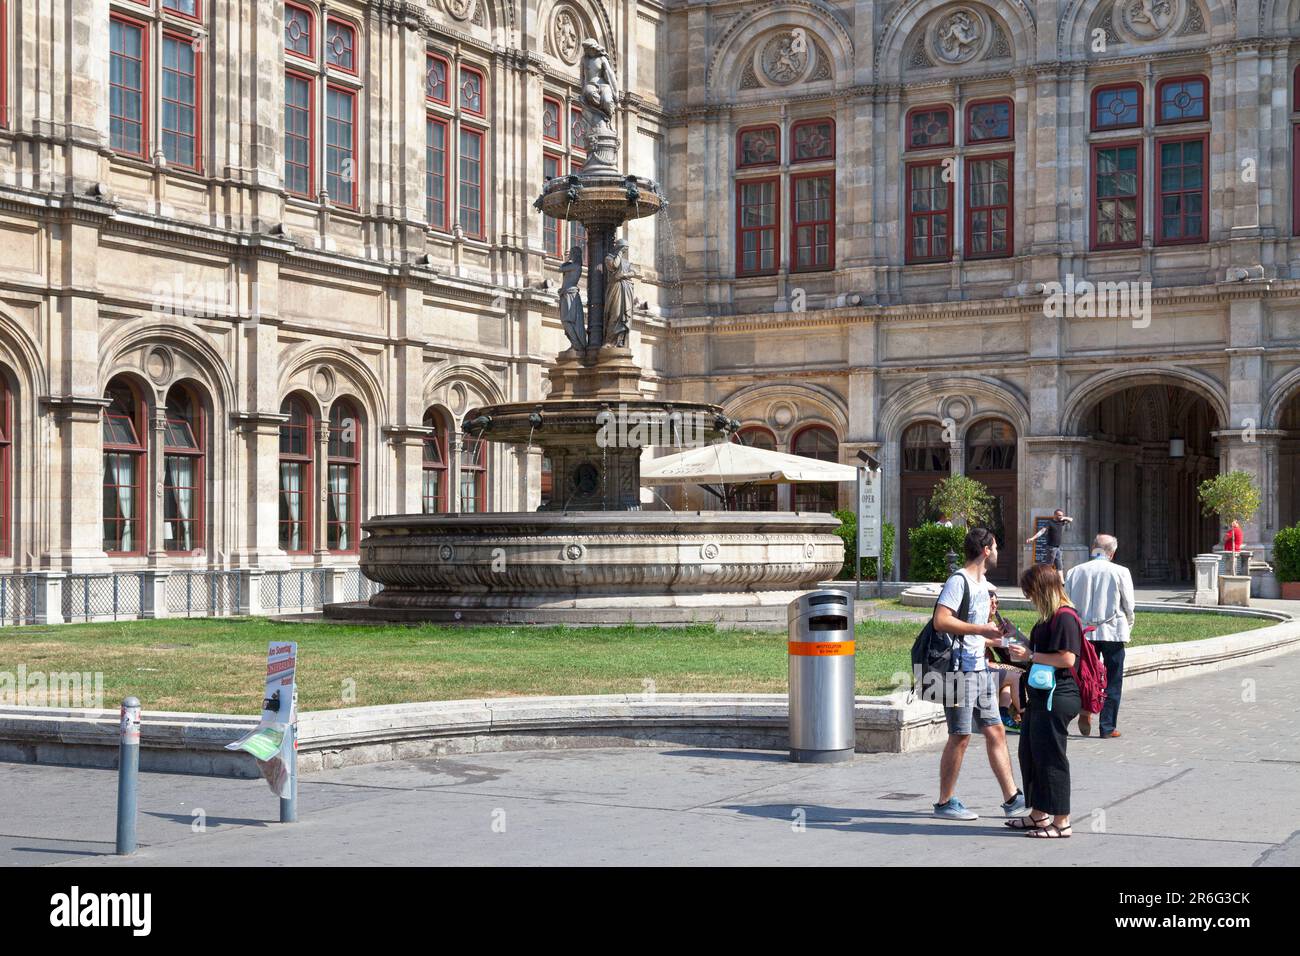 Vienna, Austria - June 17 2018: Opera fountain (German: Opernbrunnen) on the right side of the Vienna State Opera (German: Wiener Staatsoper). Stock Photo